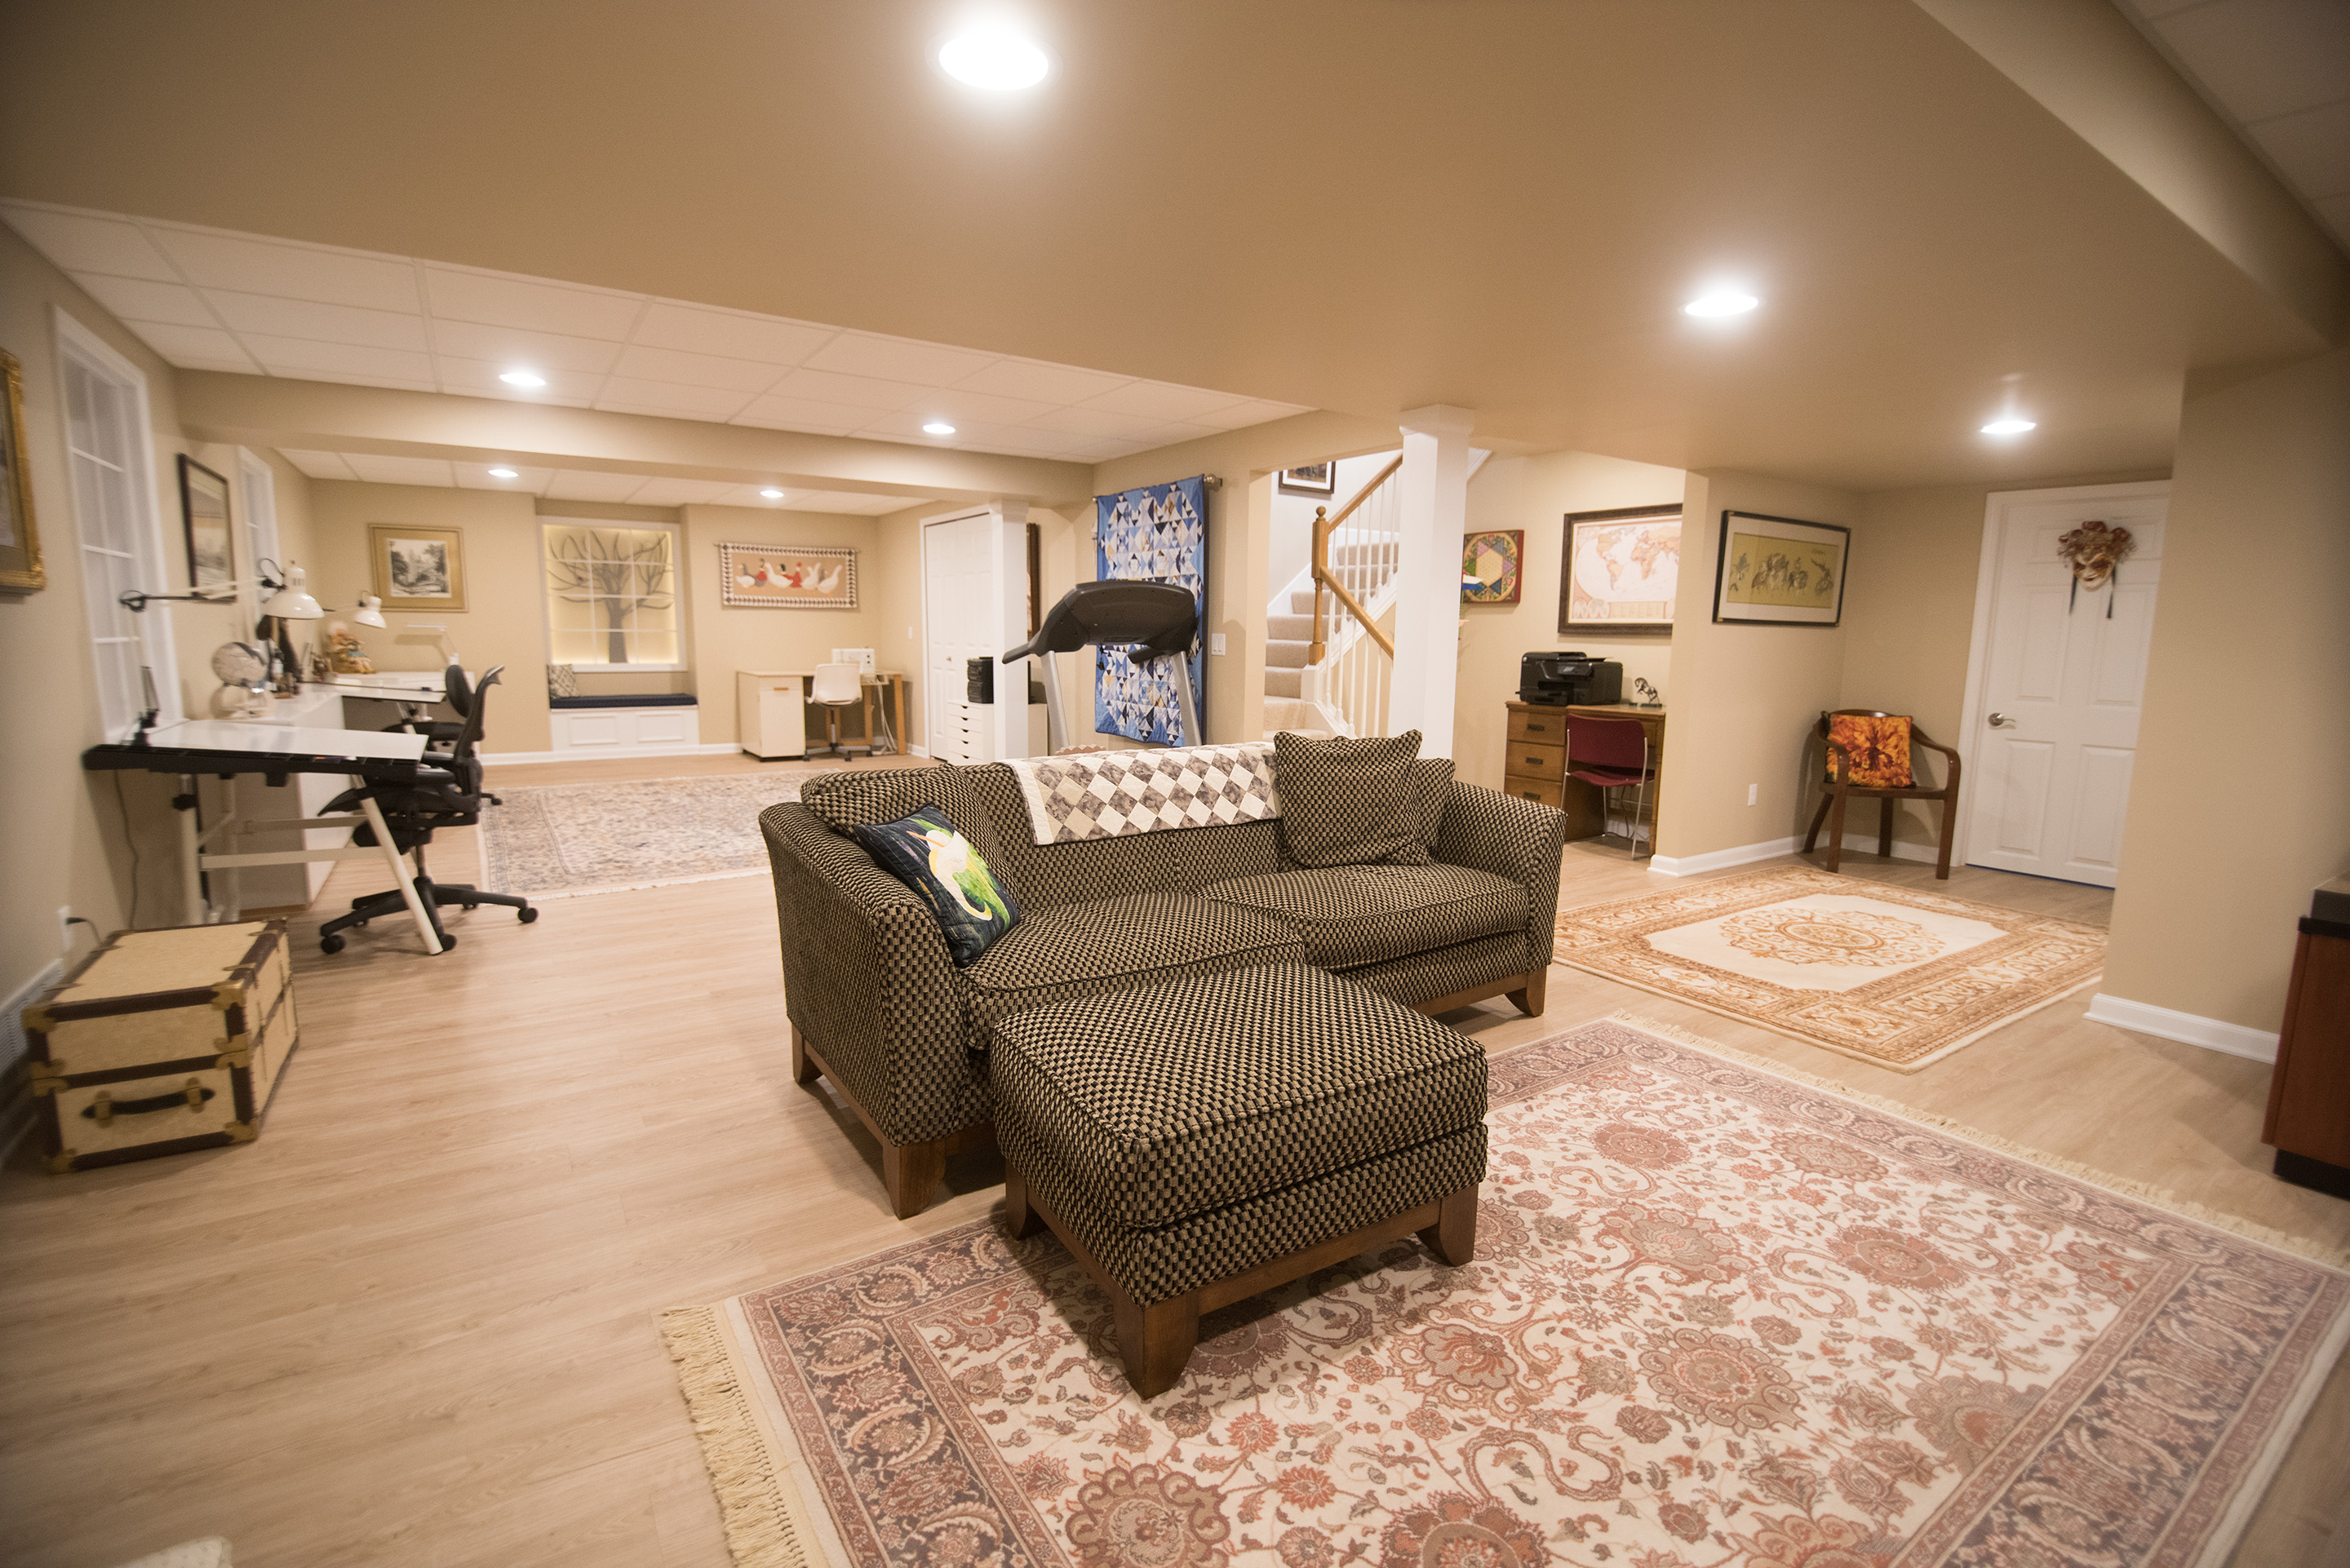 10 Inspiring Michigan Basement Living Room Designs - Finished Basements